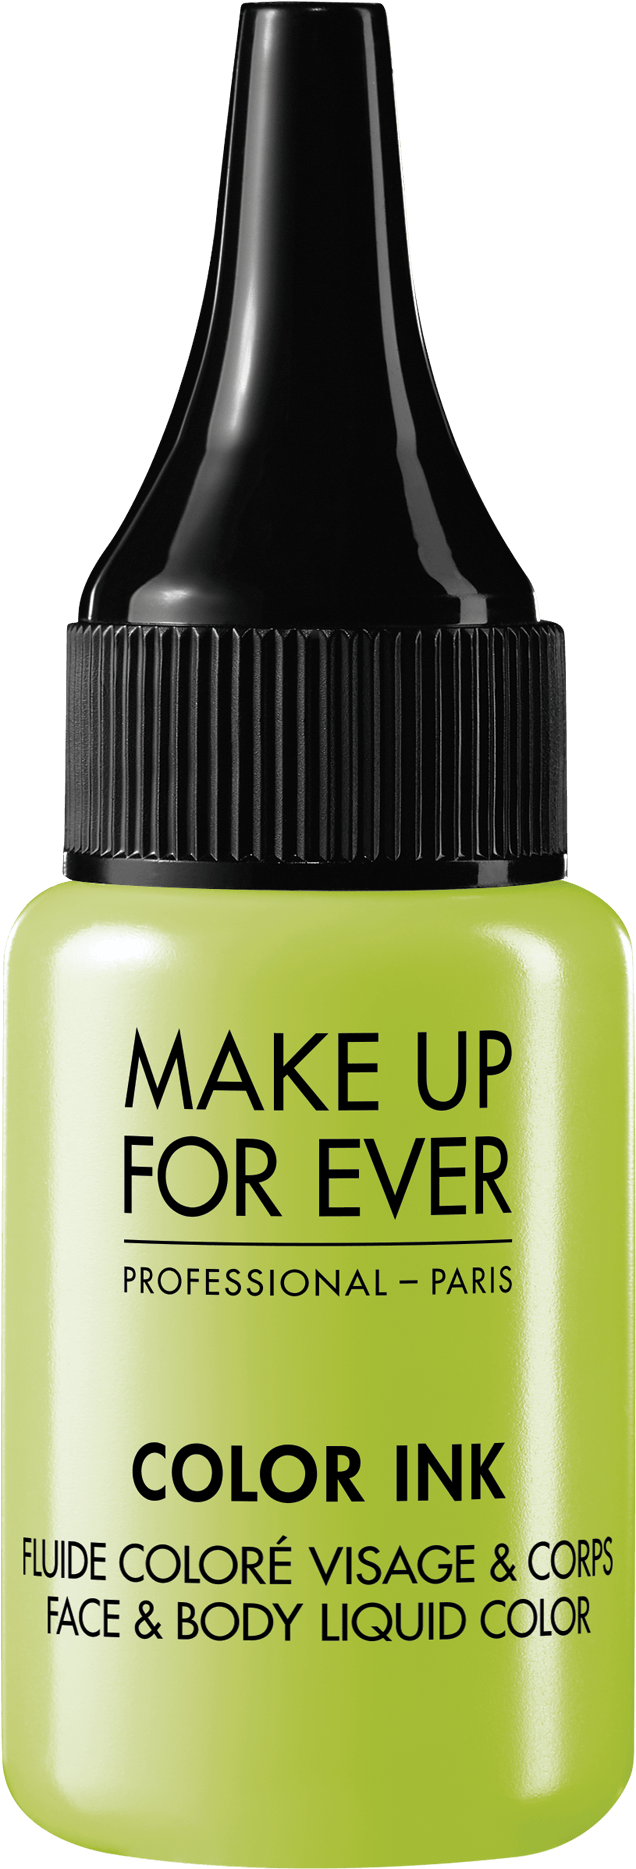 Make Up For Ever Color Ink (2048x2048), Png Download